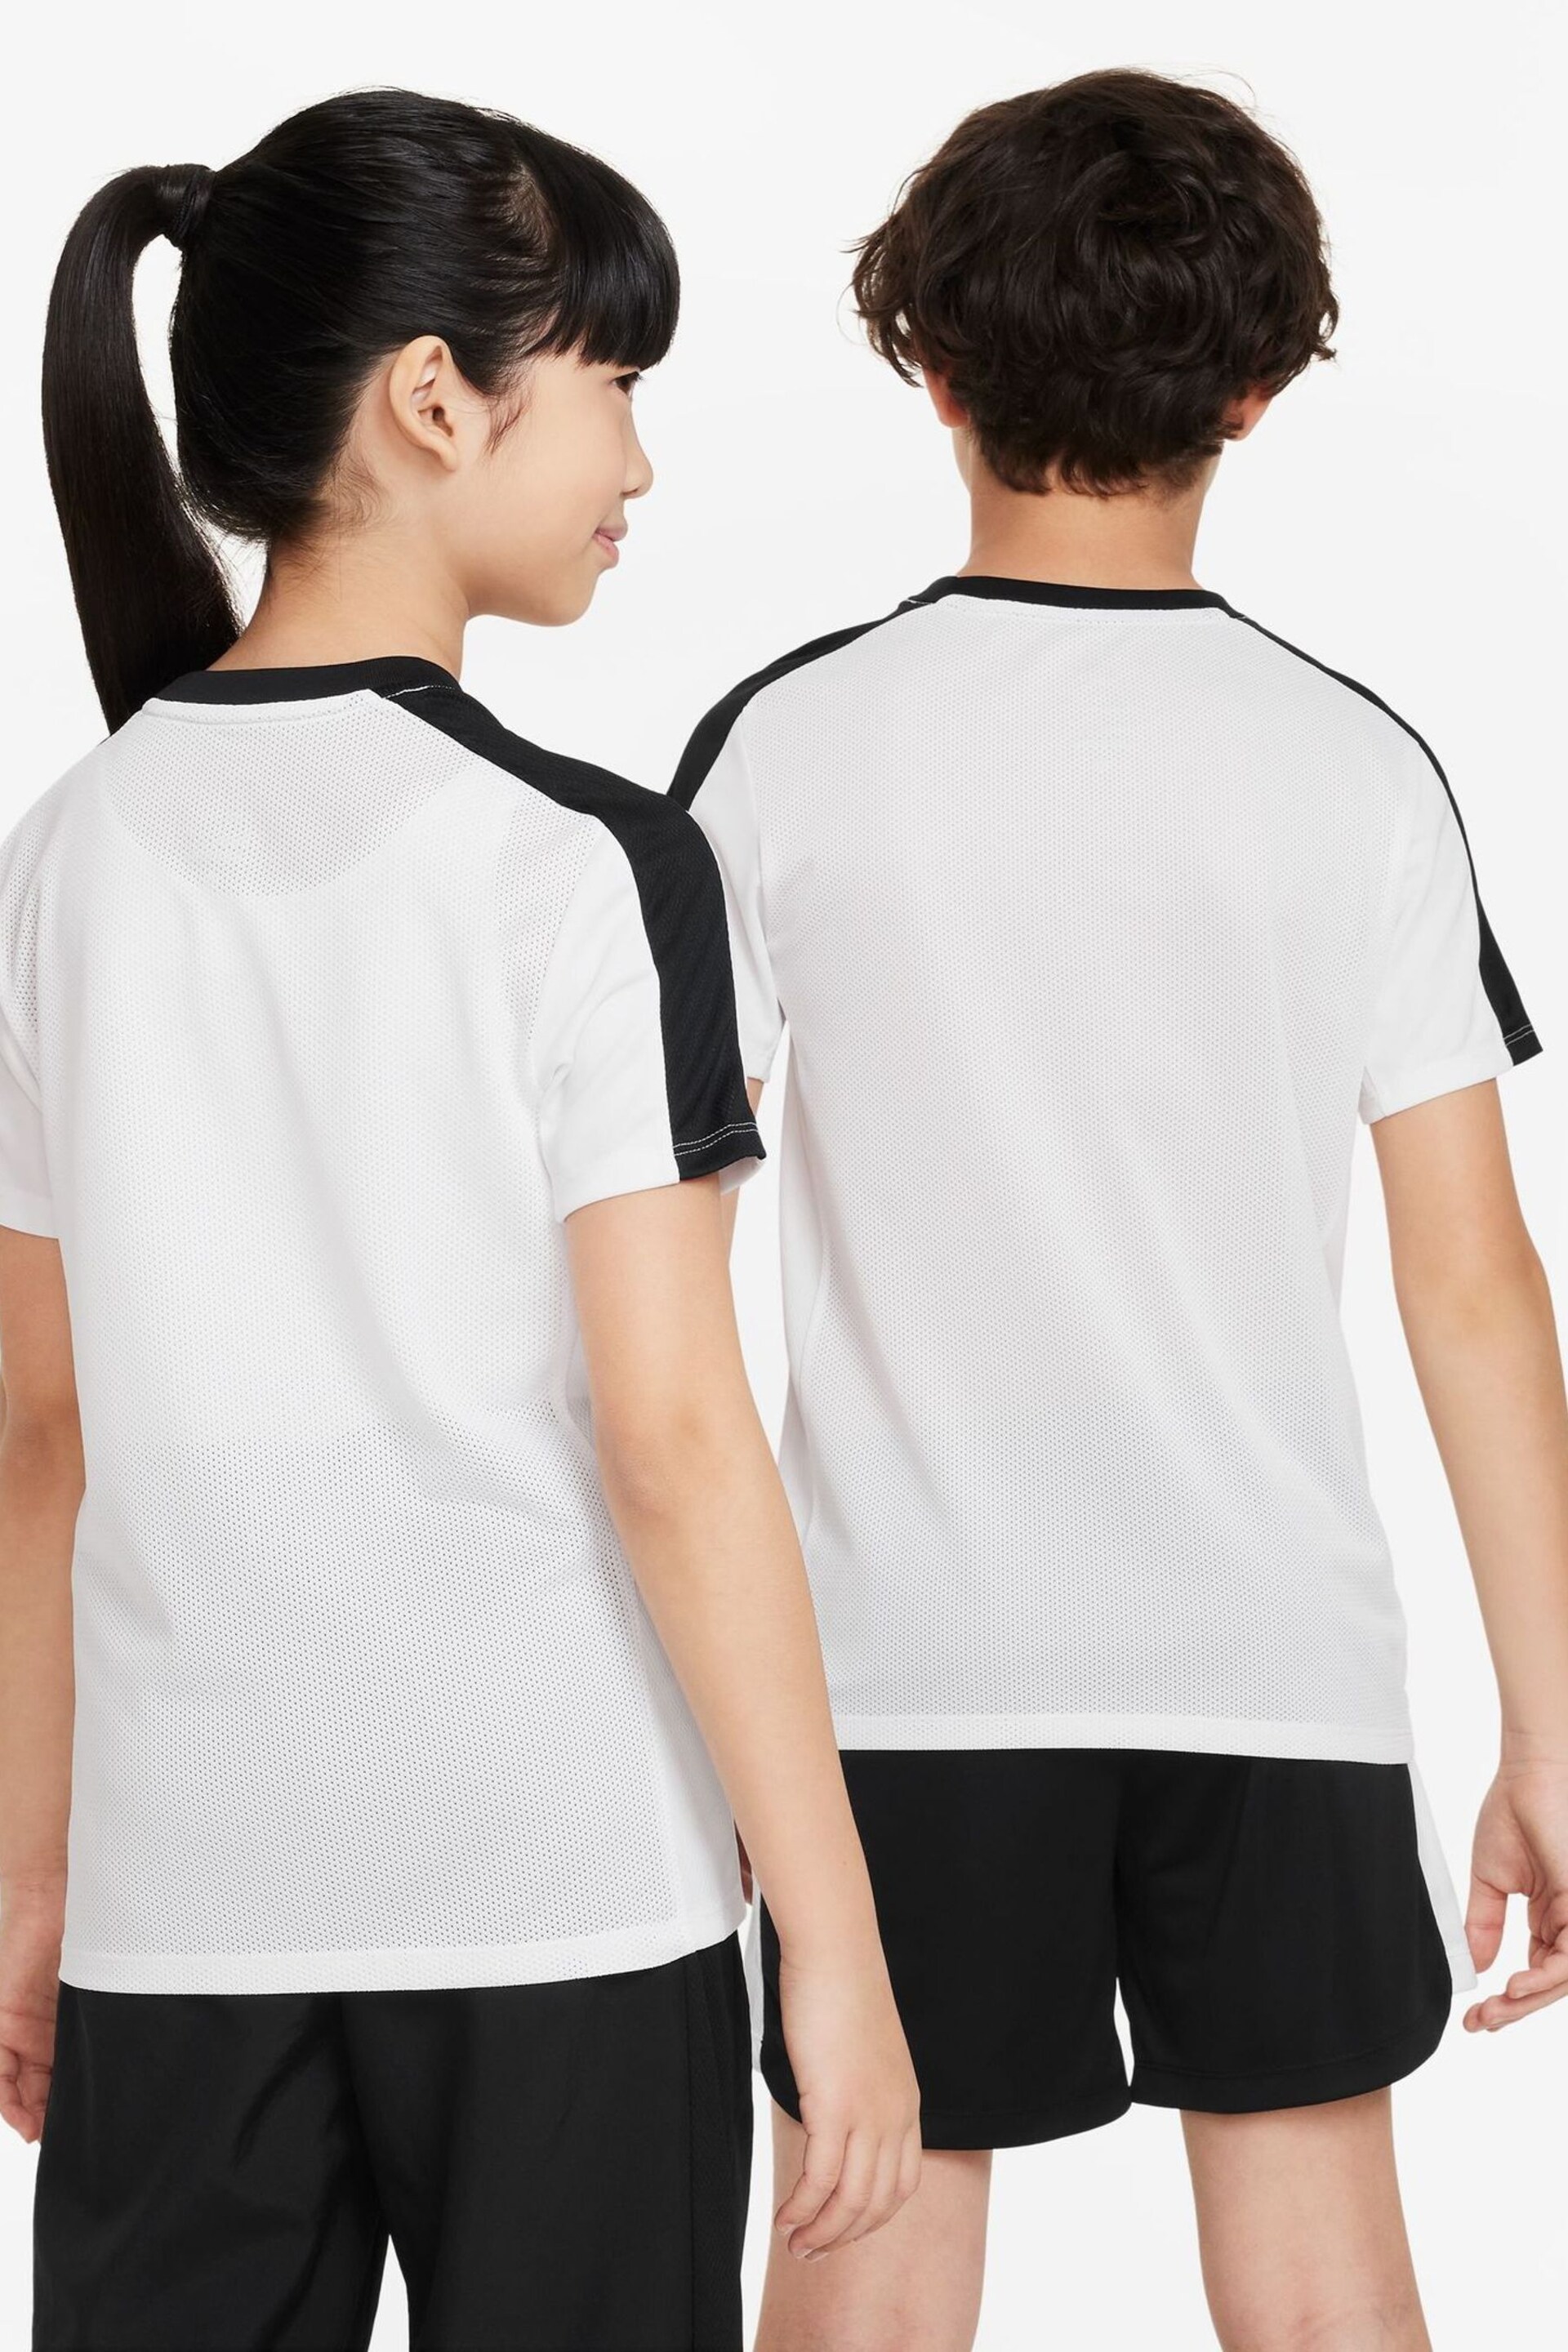 Nike White/Black Dri-FIT Academy Training T-Shirt - Image 3 of 4